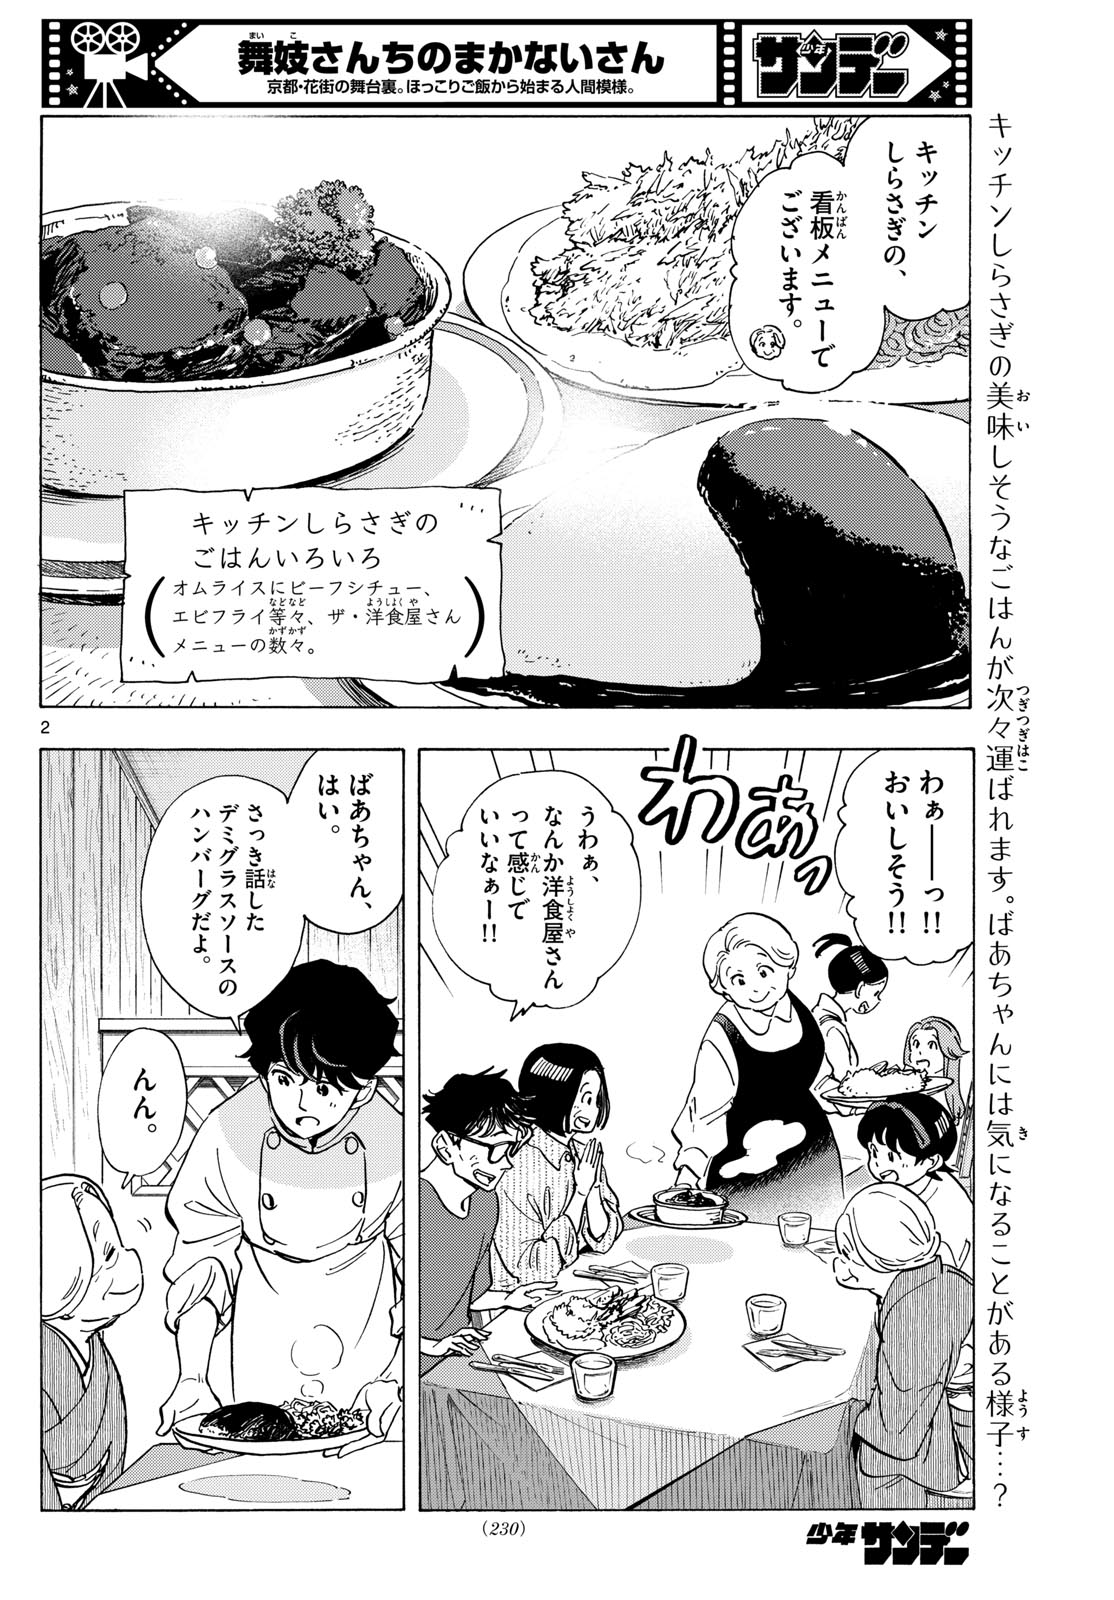 Maiko-san Chi no Makanai-san - Chapter 302 - Page 2